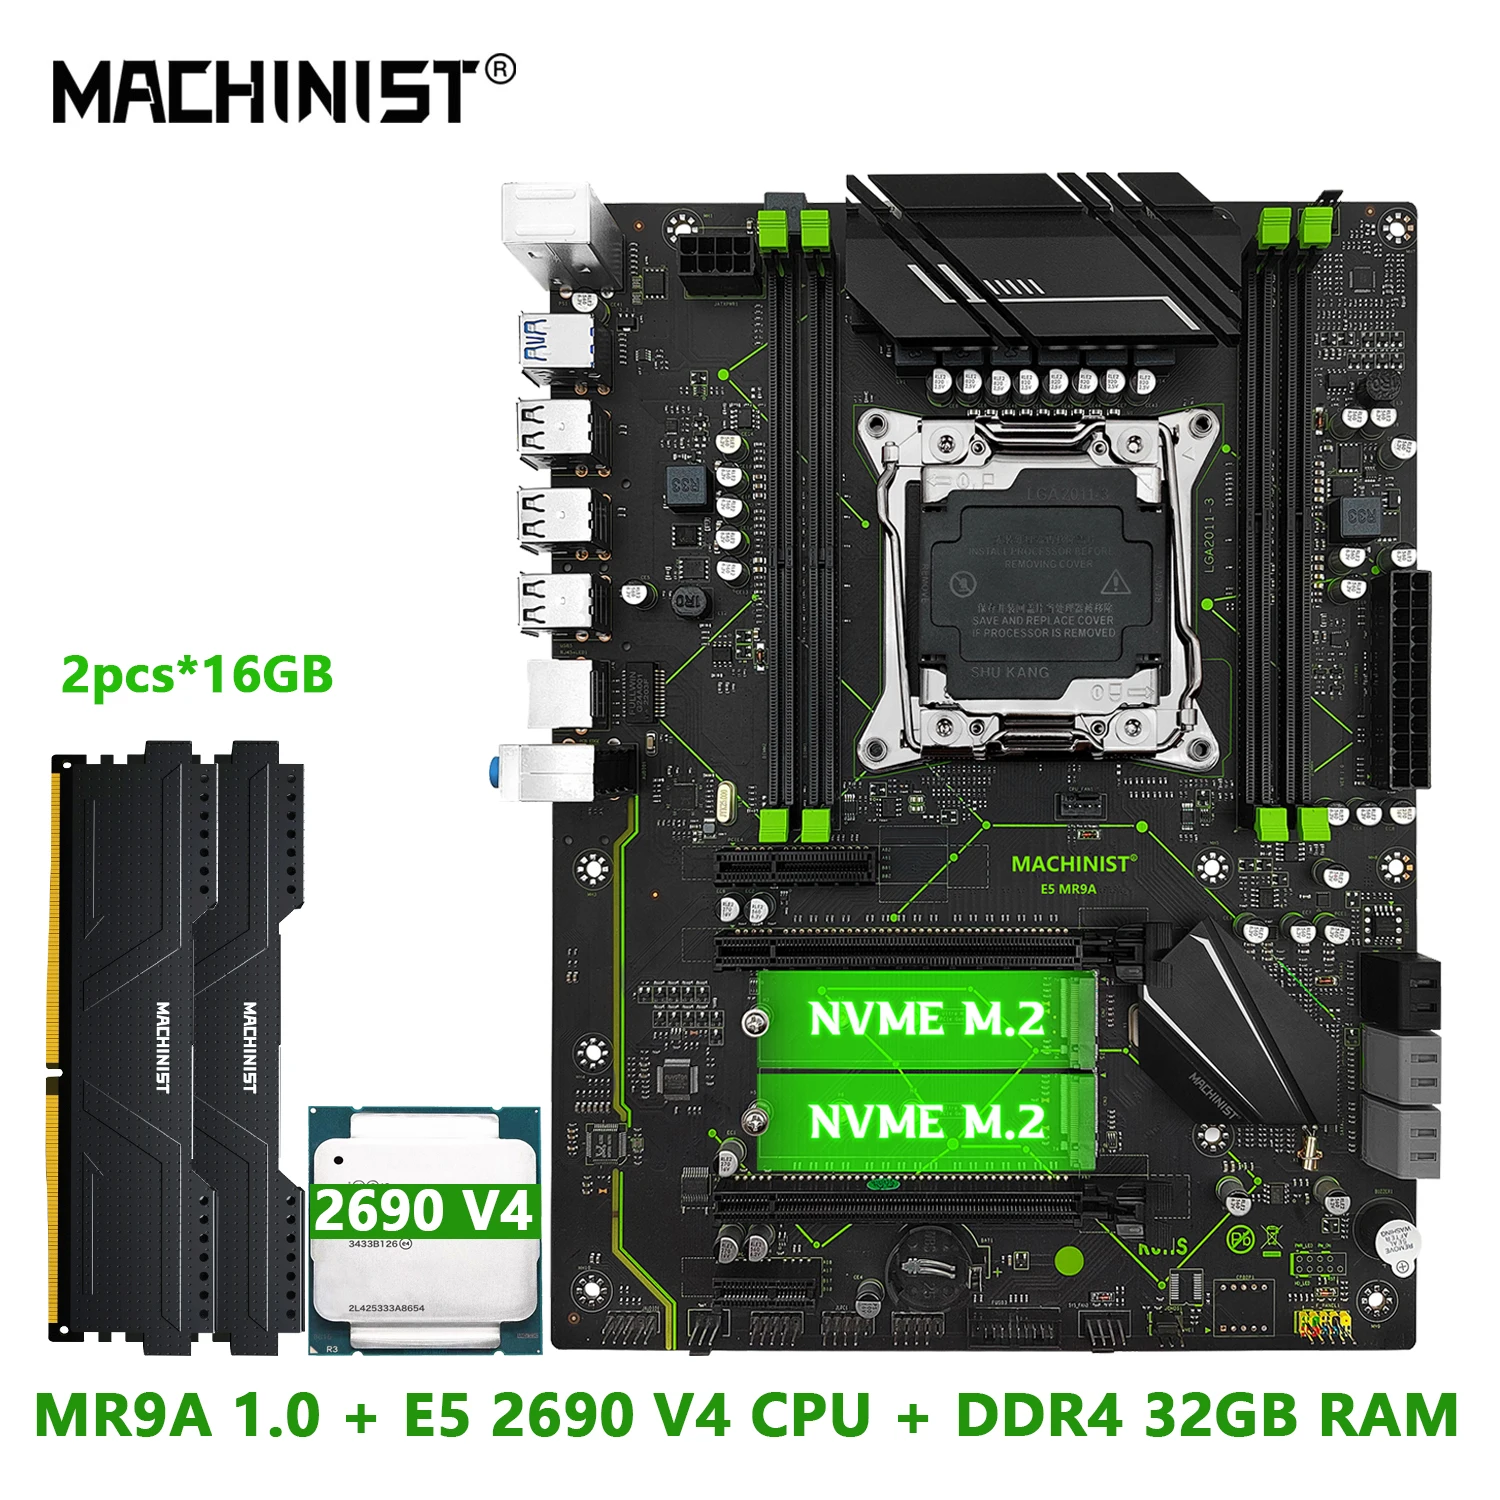 

Комплект материнской платы MACHINIST X99 LGA 2011-3 Xeon E5 2690 V4 ЦПУ процессор DDR4 ECC 2*16 Гб ОЗУ память 2133 МГц ATX NVME M.2 MR9A